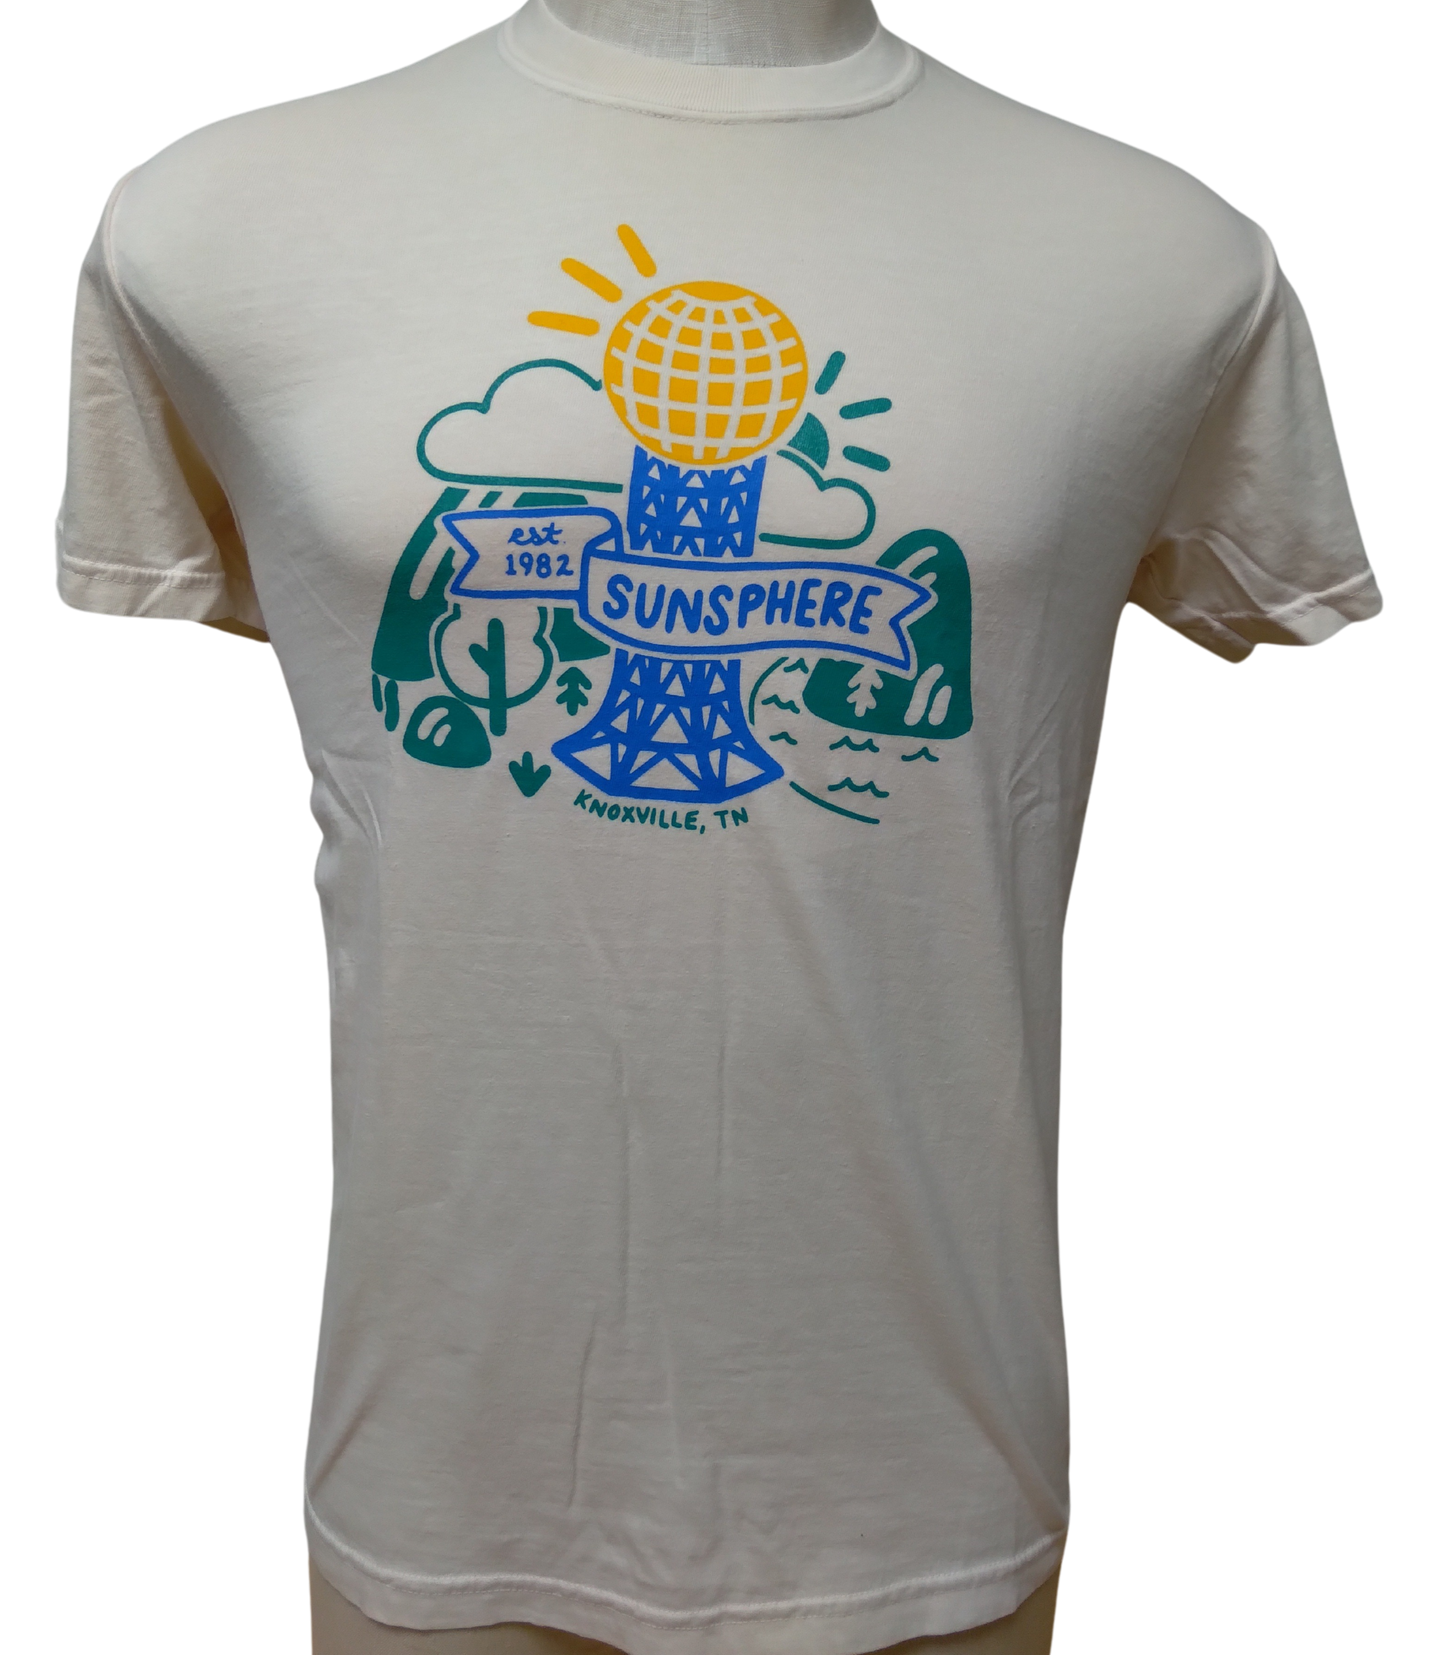 Sunsphere Illustrated T-Shirt